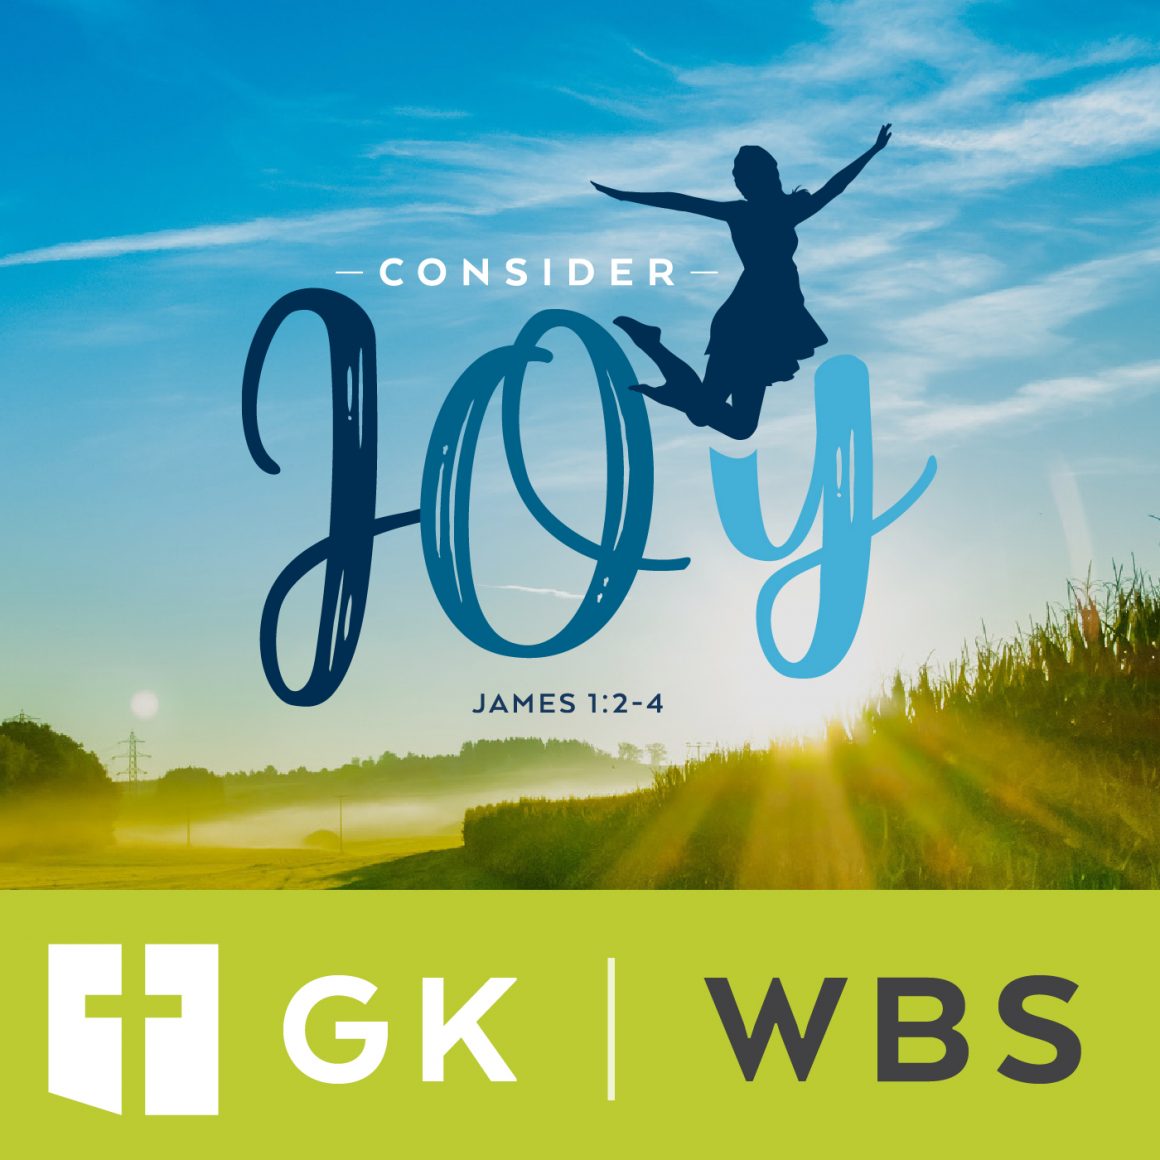 Consider Joy: Daniel – Conclusion